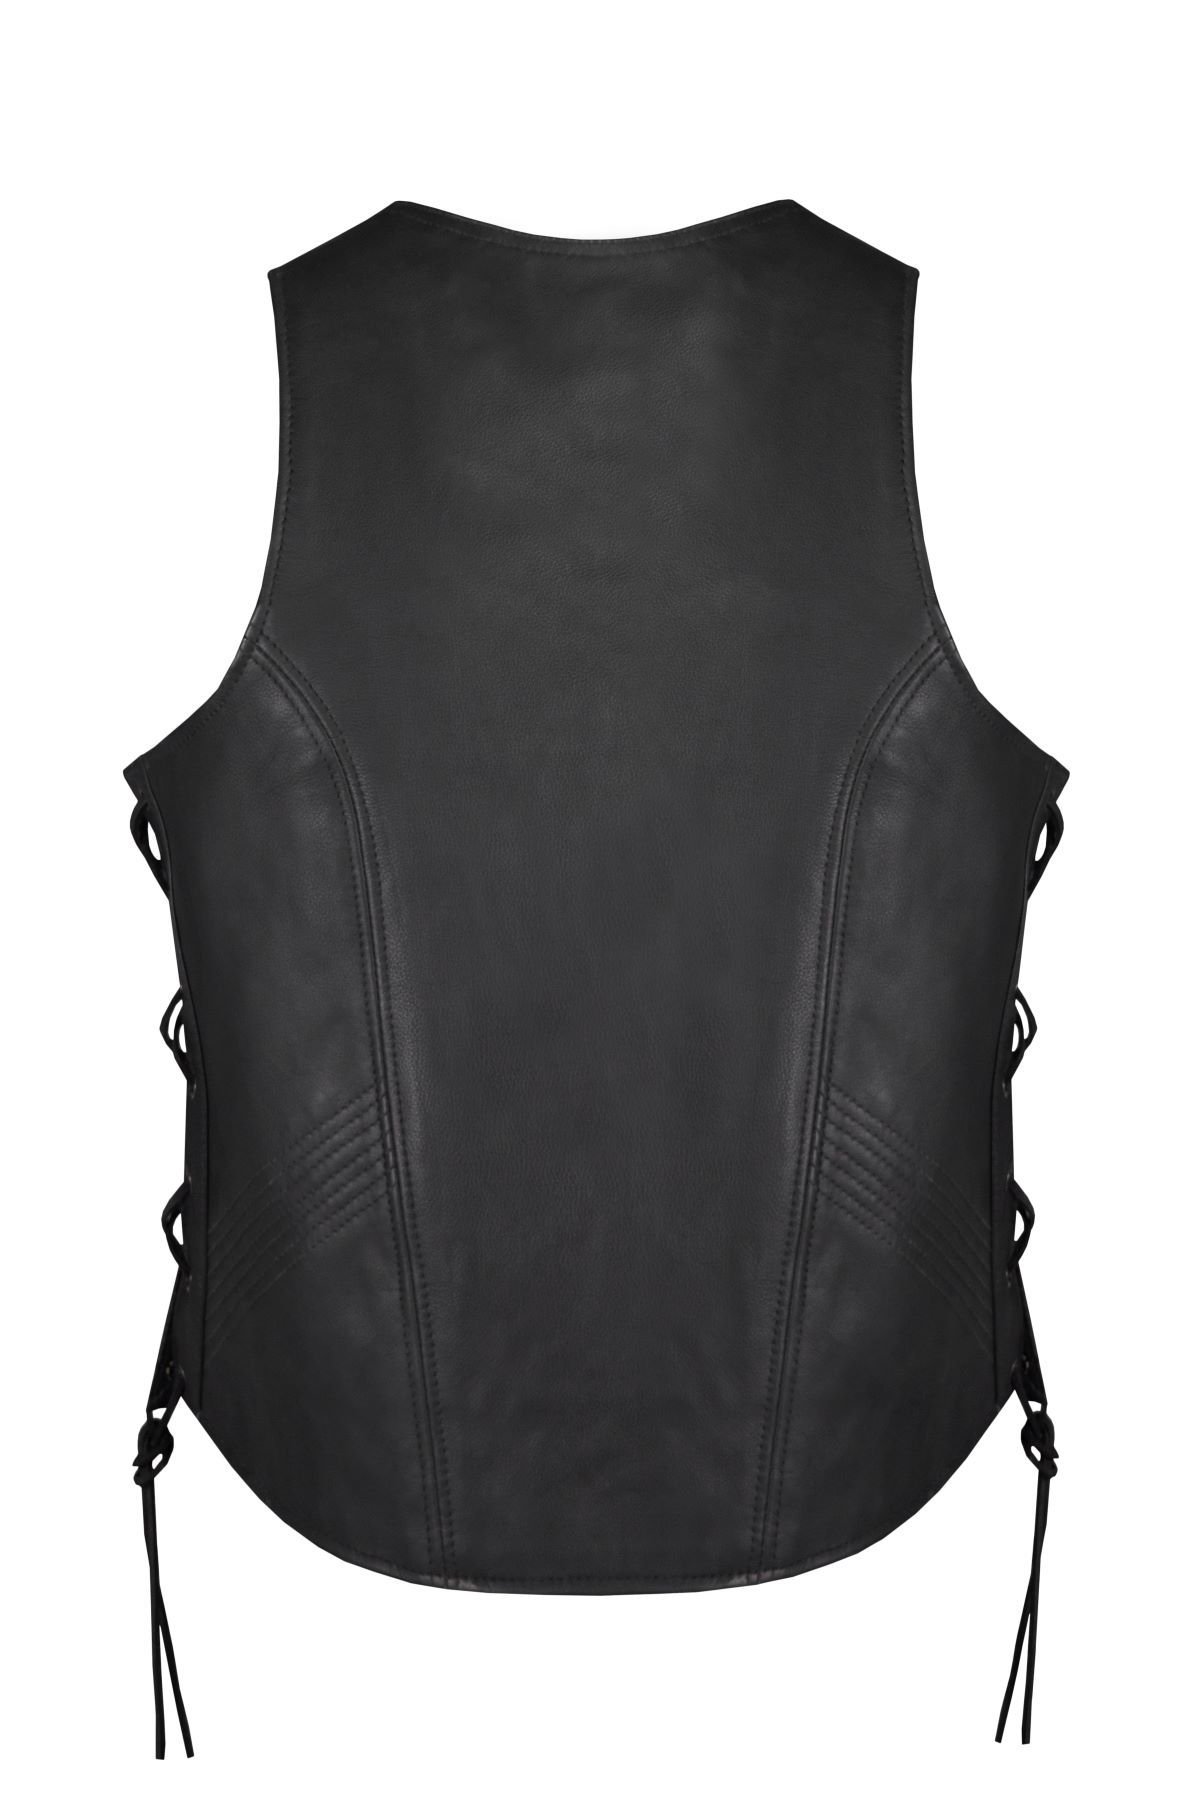 Leather Vest - Women's - Concealed Gun Pockets - Zipper - LV8545-88-DL